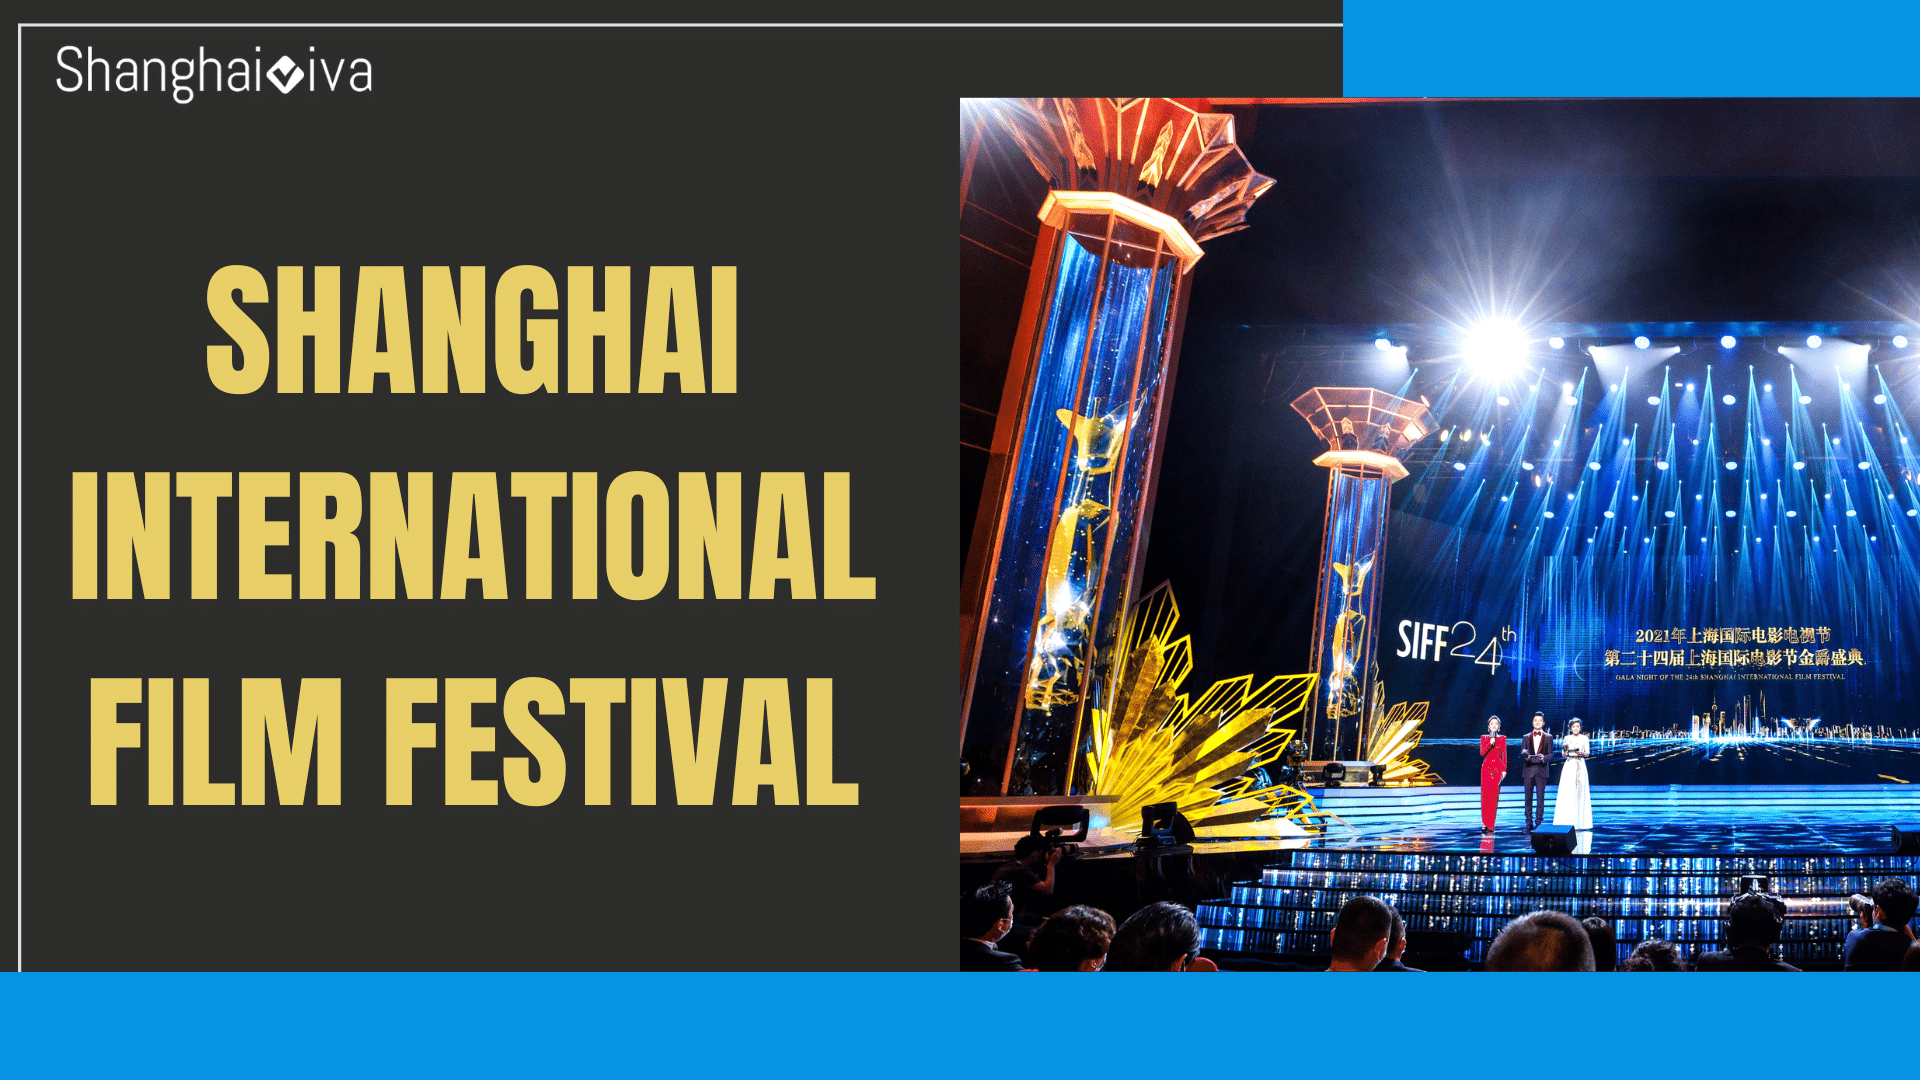 Shanghai International Film Festival: A Celebration of Cinema